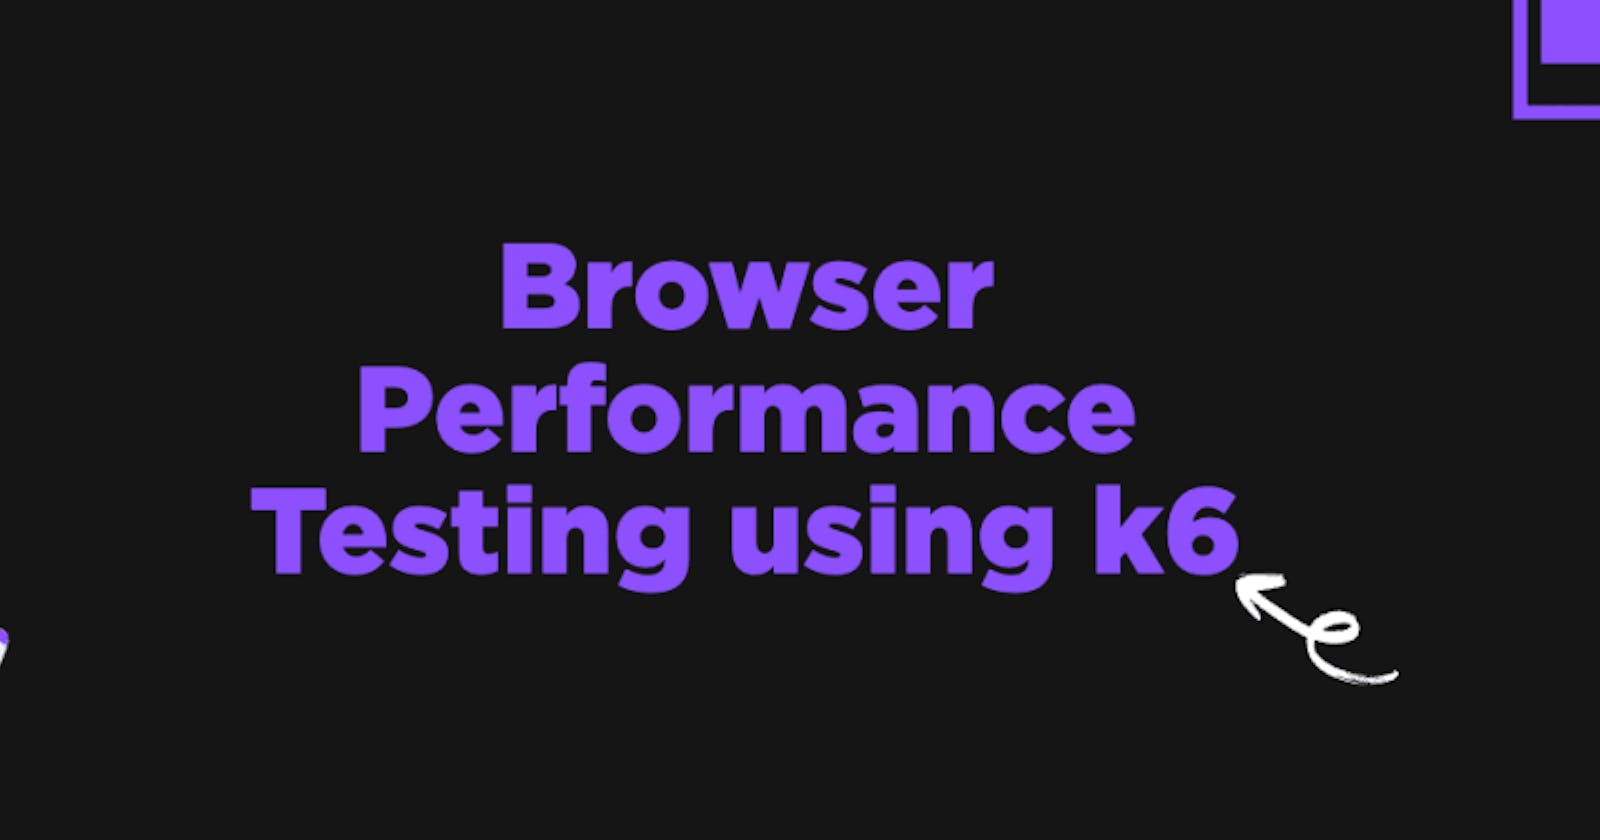 Browser Performance Testing using k6